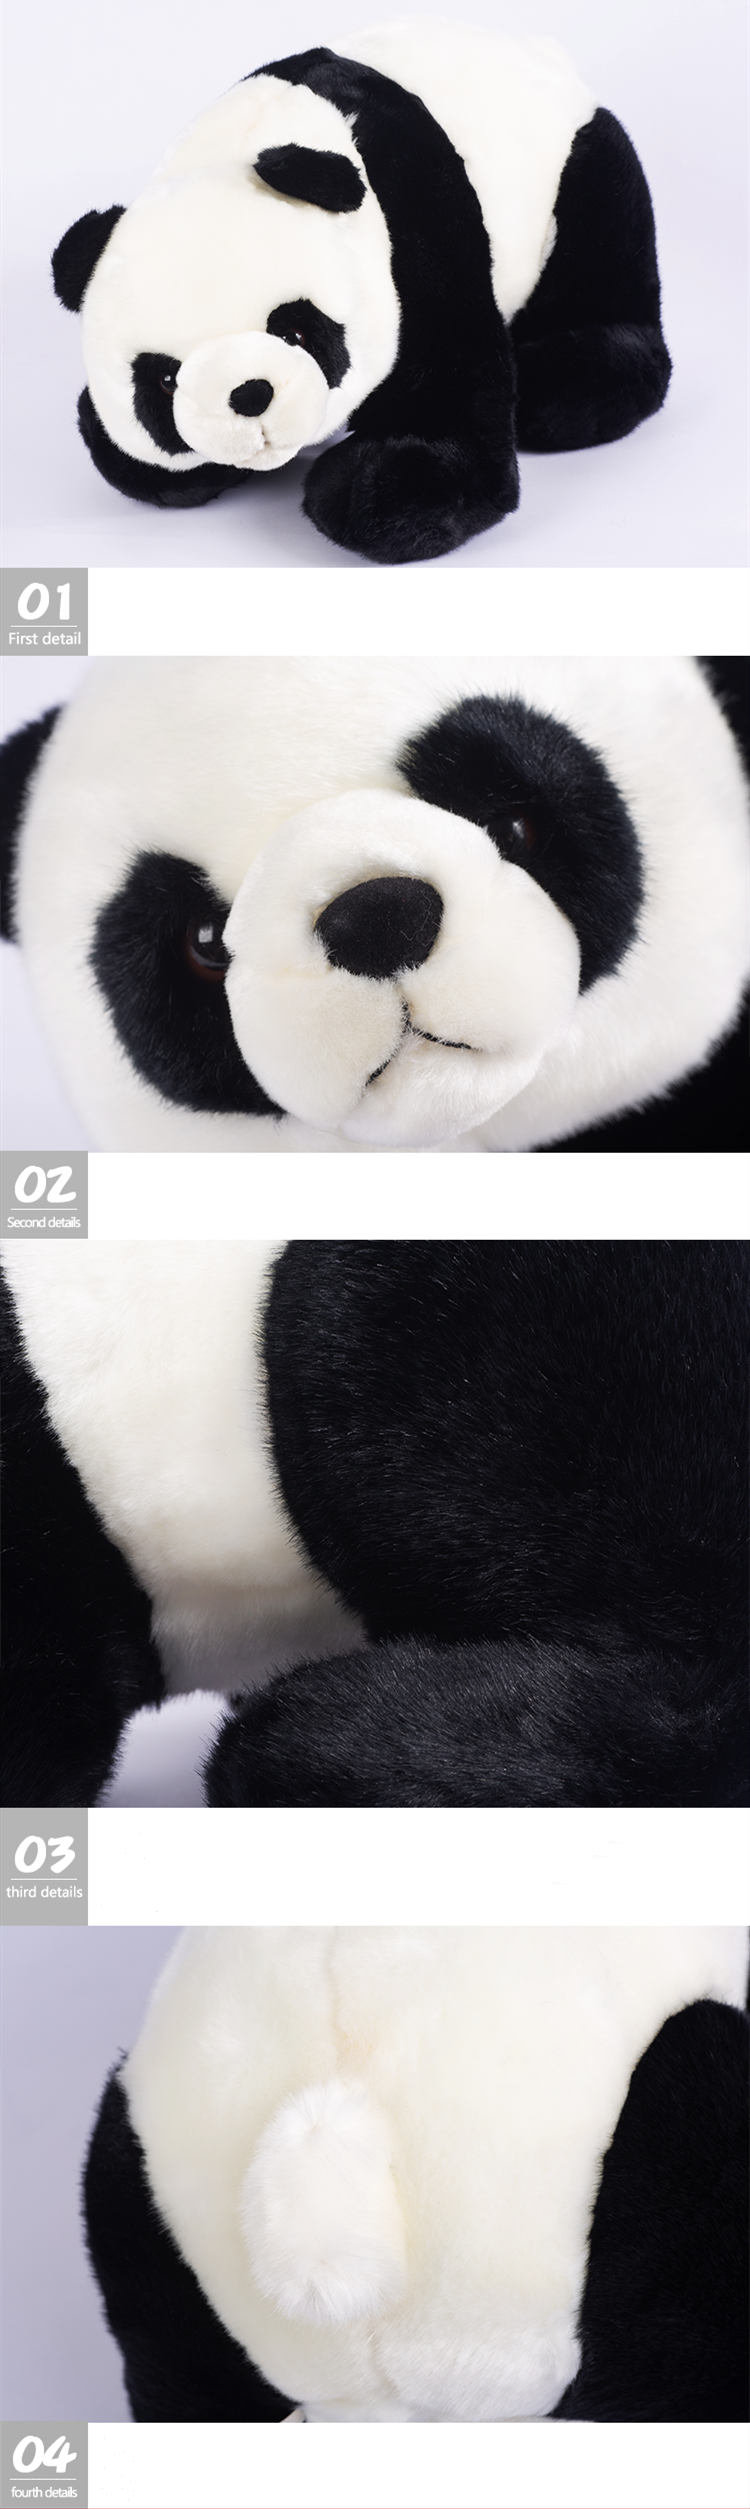 Реалистичная мягкая игрушка панда, реалистичная ходячая плюшевая игрушка панда